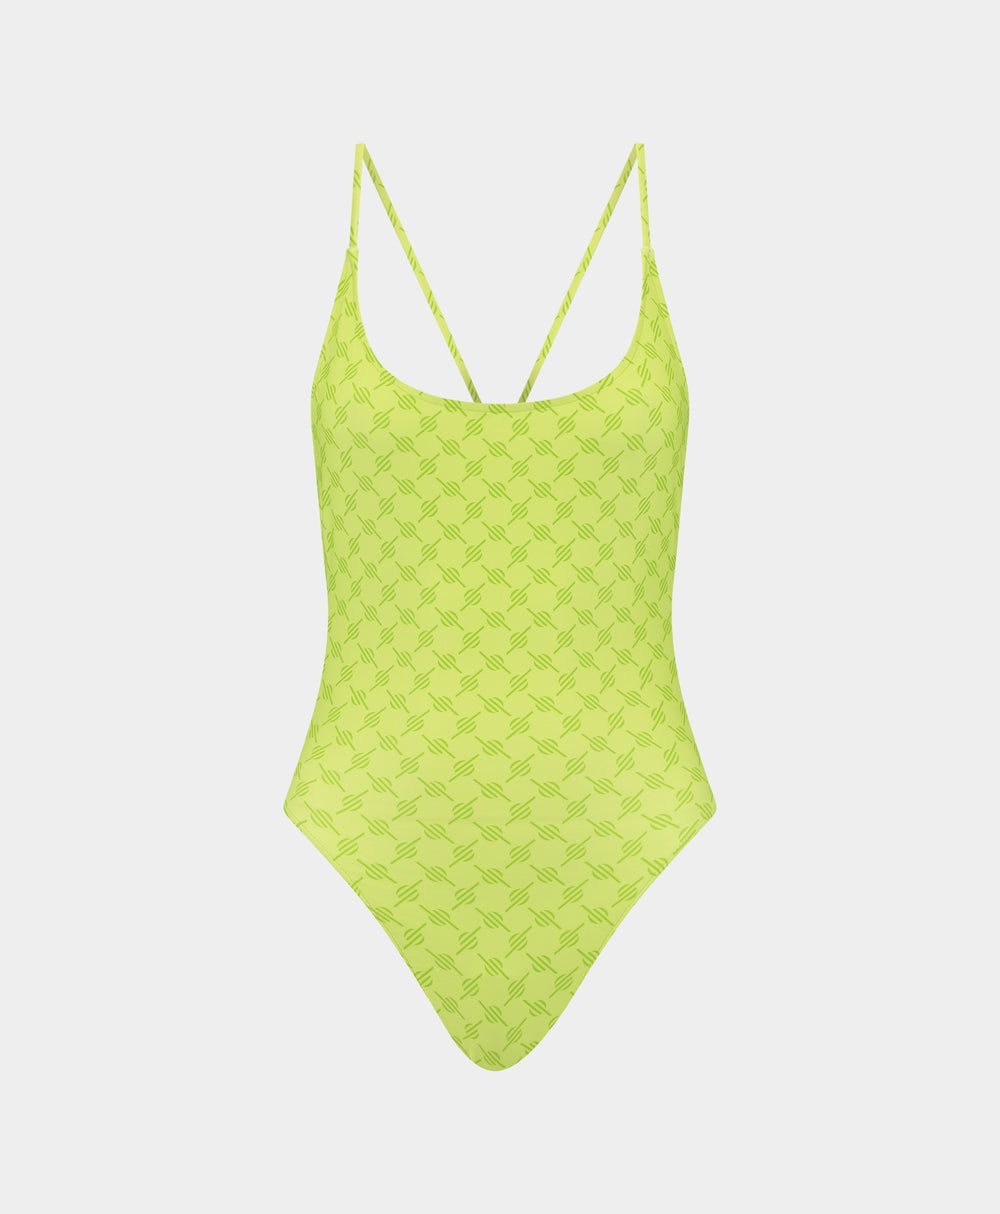 DP - Daiquiri Green Reya Monogram Swimsuit - Packshot - Front